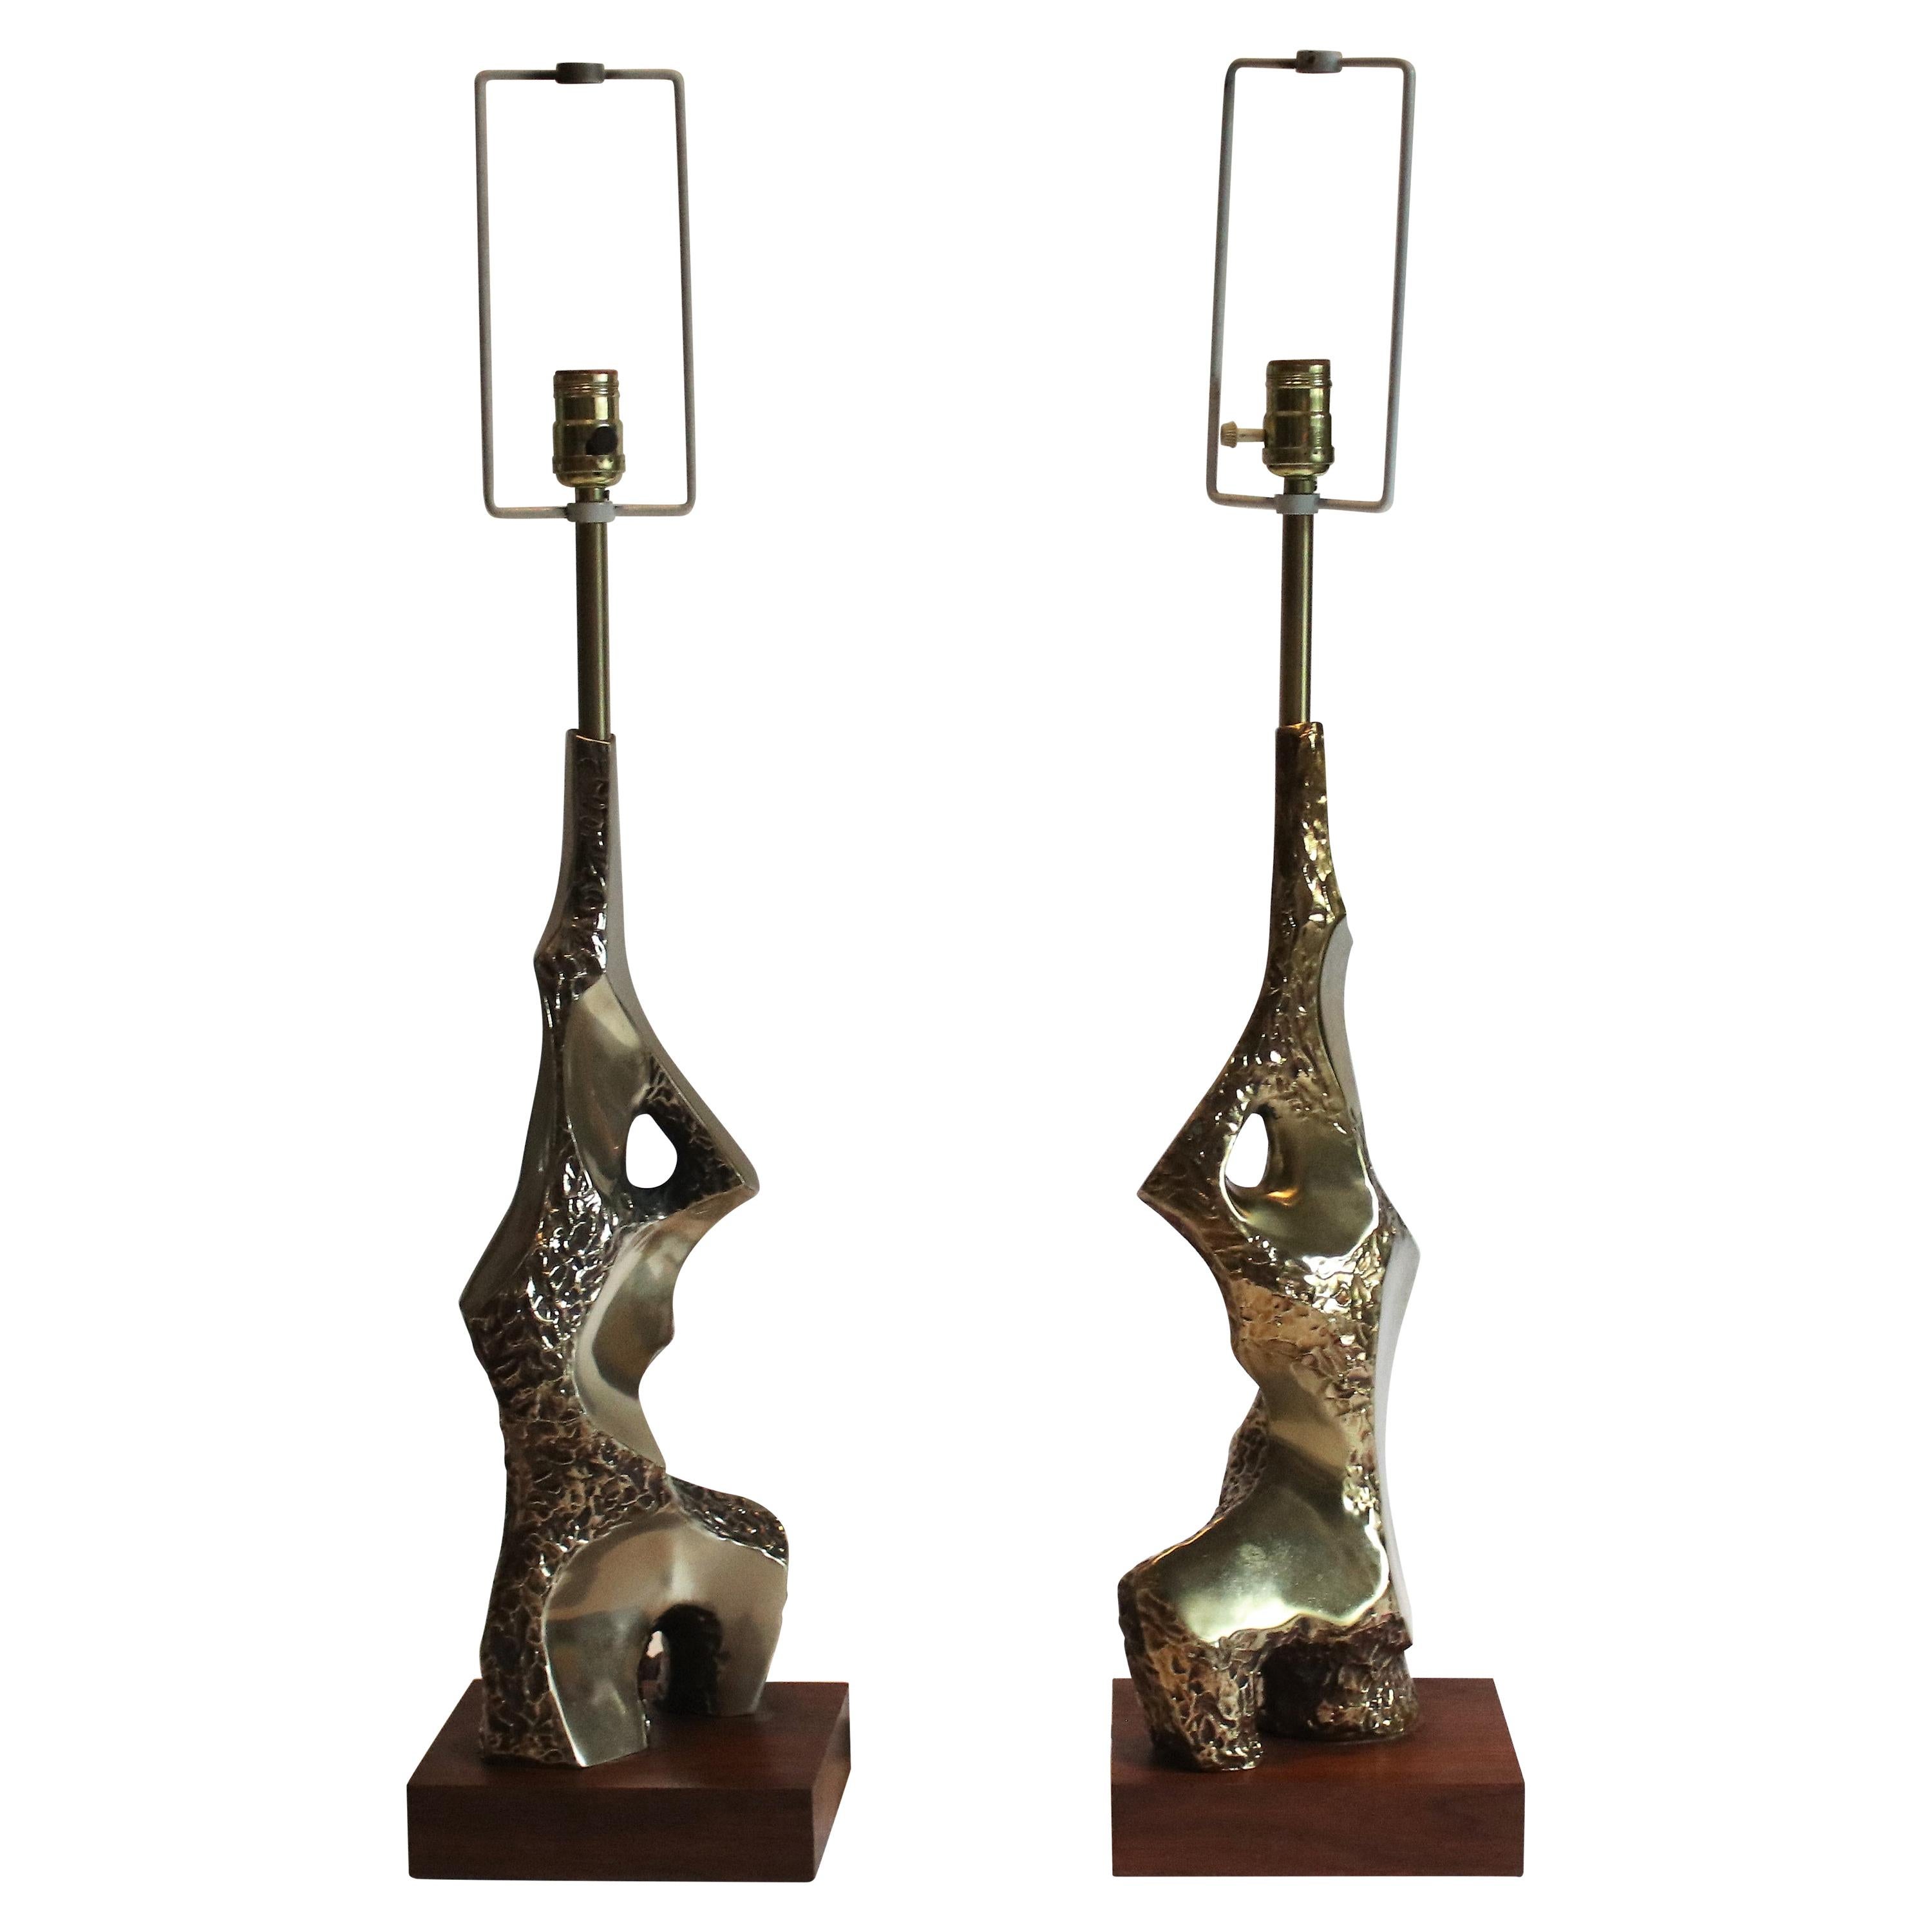 Pair of Sculptural Brutalist Lamps by Laurel